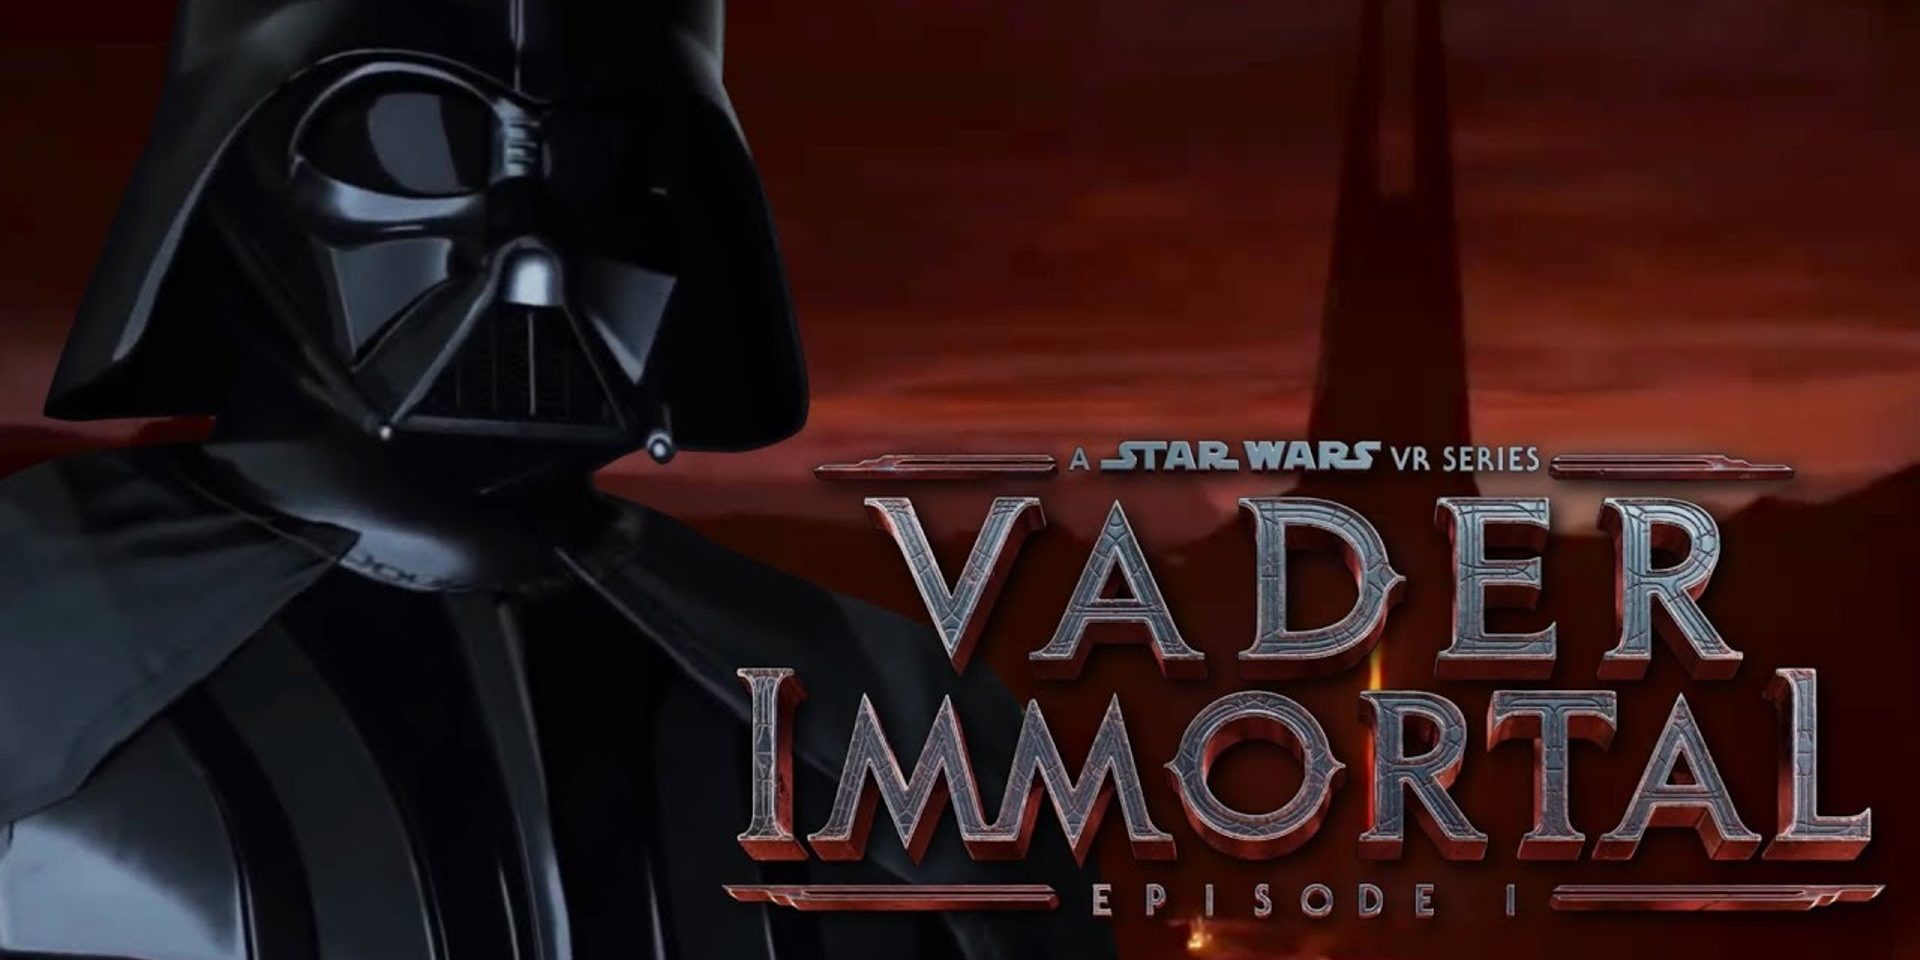 Annunciato Vader Immortal: A Star Wars VR Series per Oculus Quest